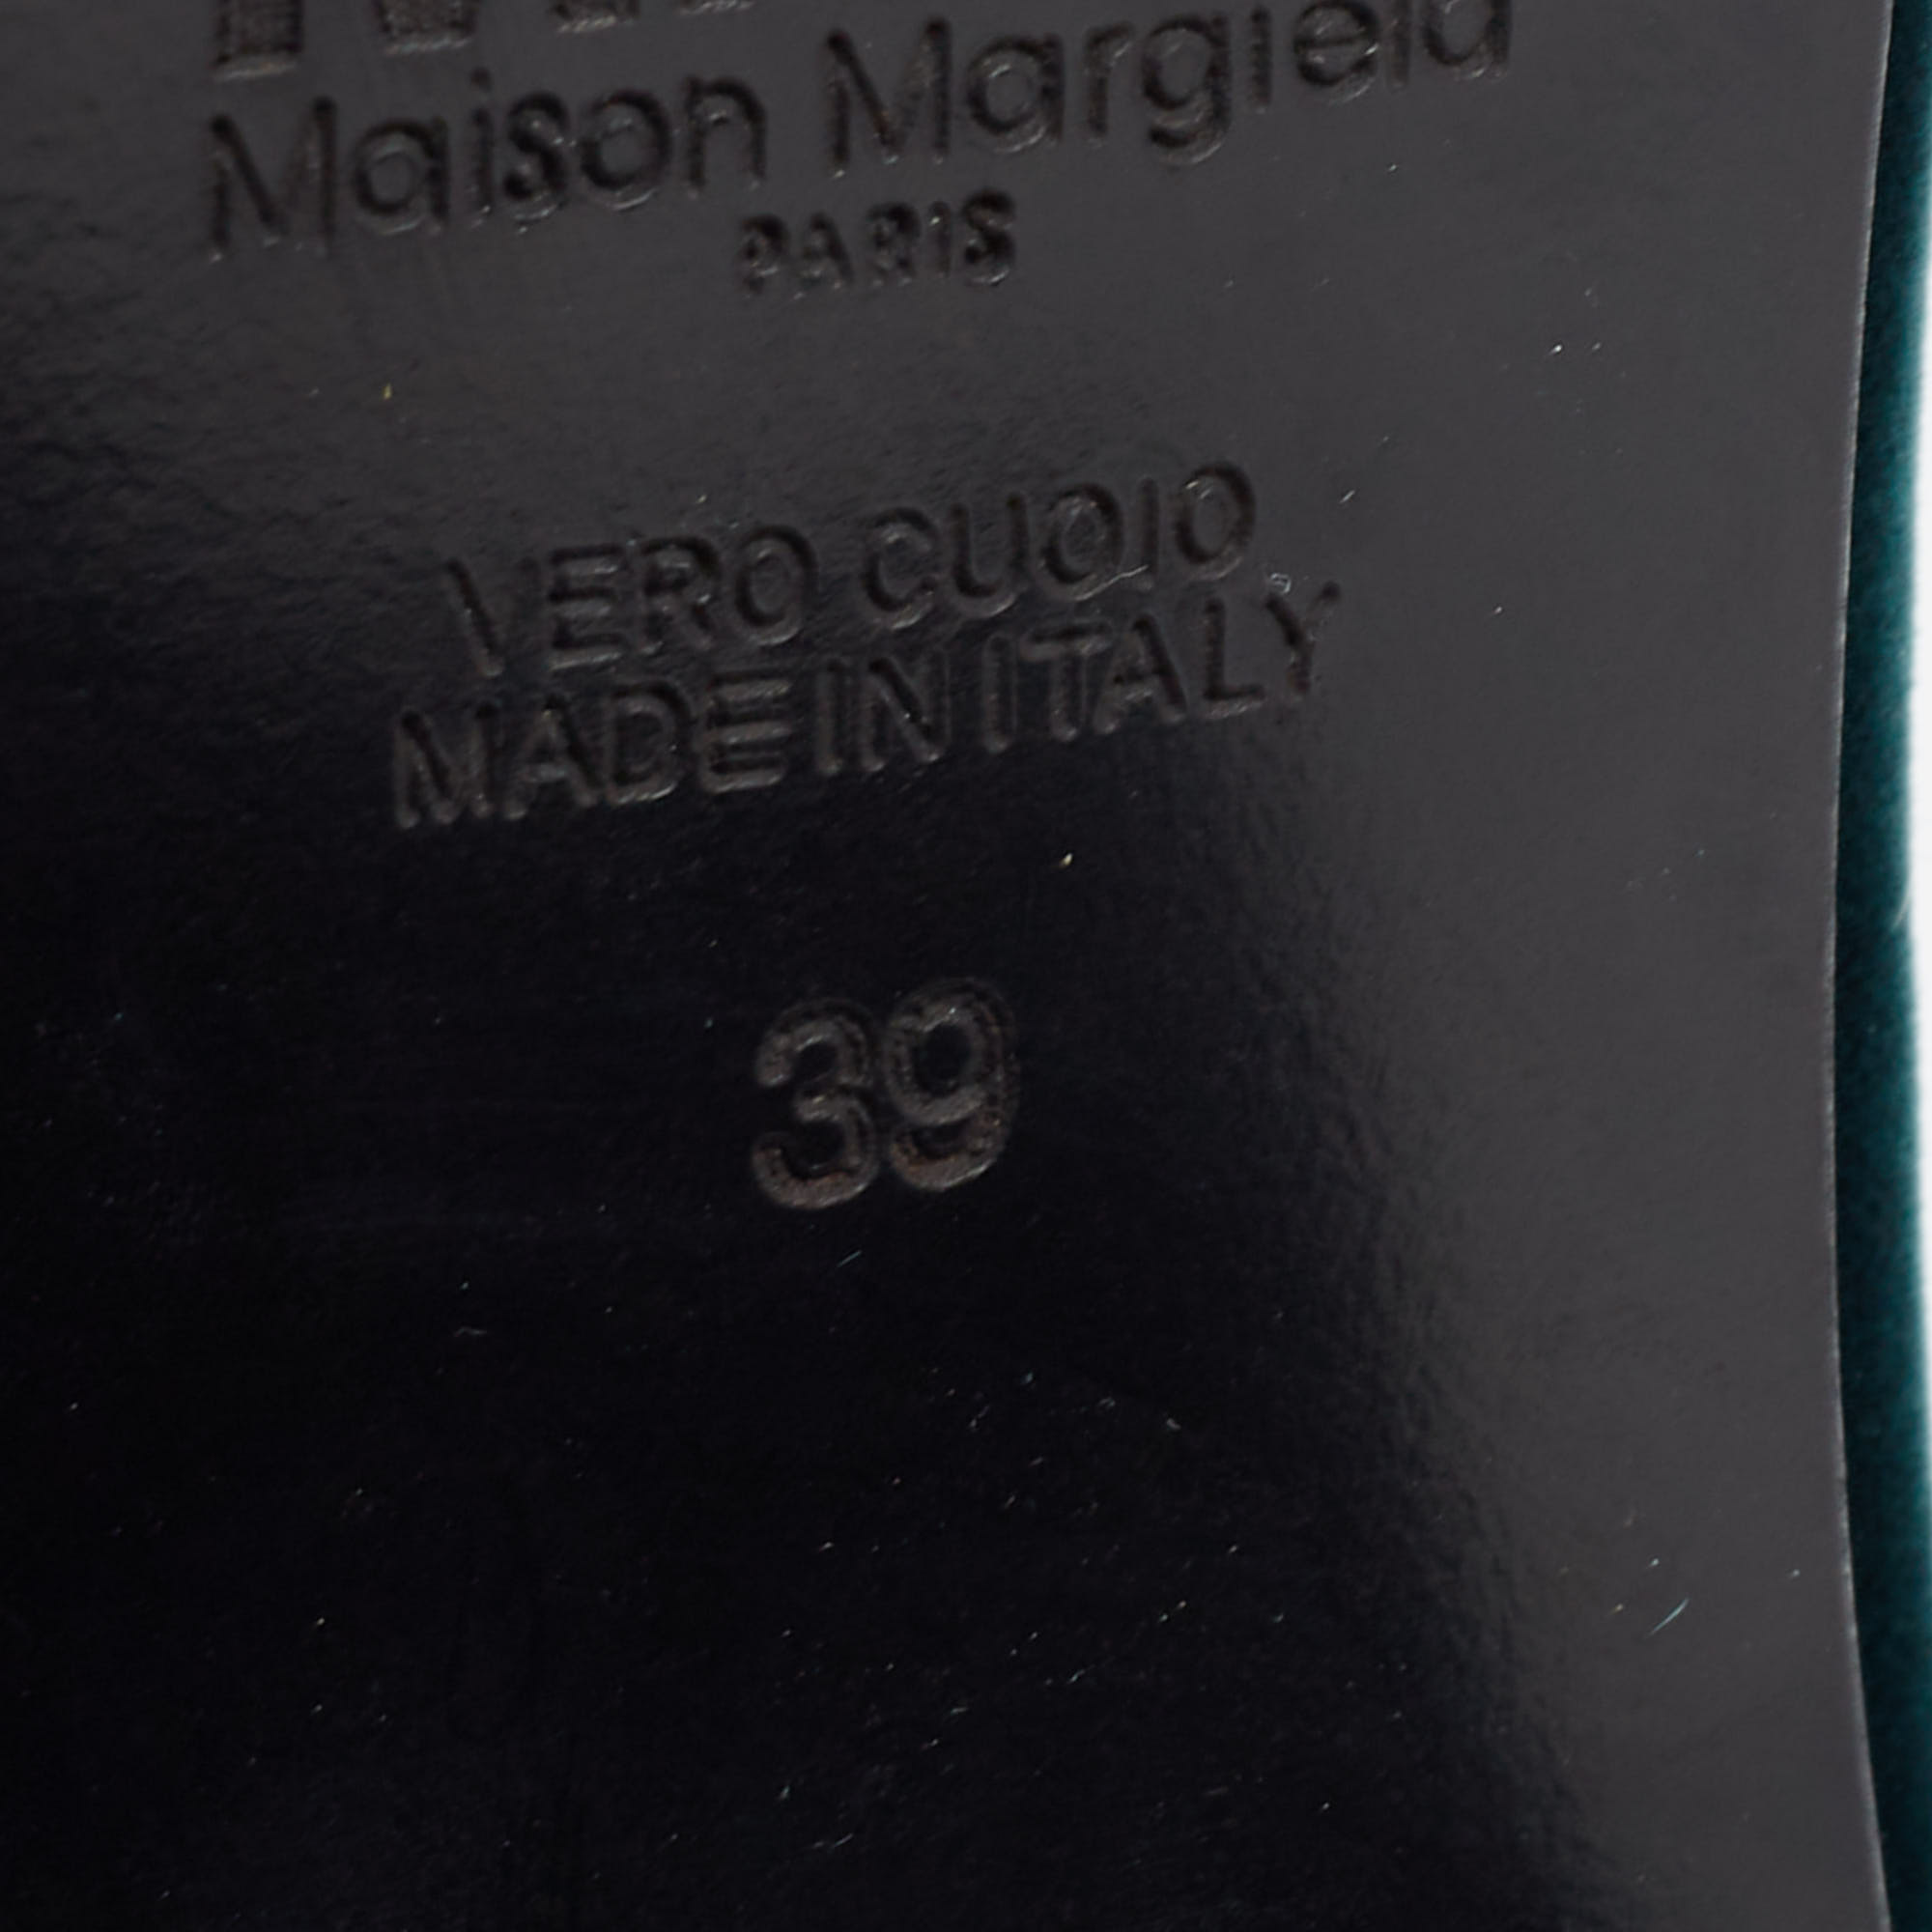 Maison Martin Margiela Green Velvet Embellished Ankle Boots Size 39